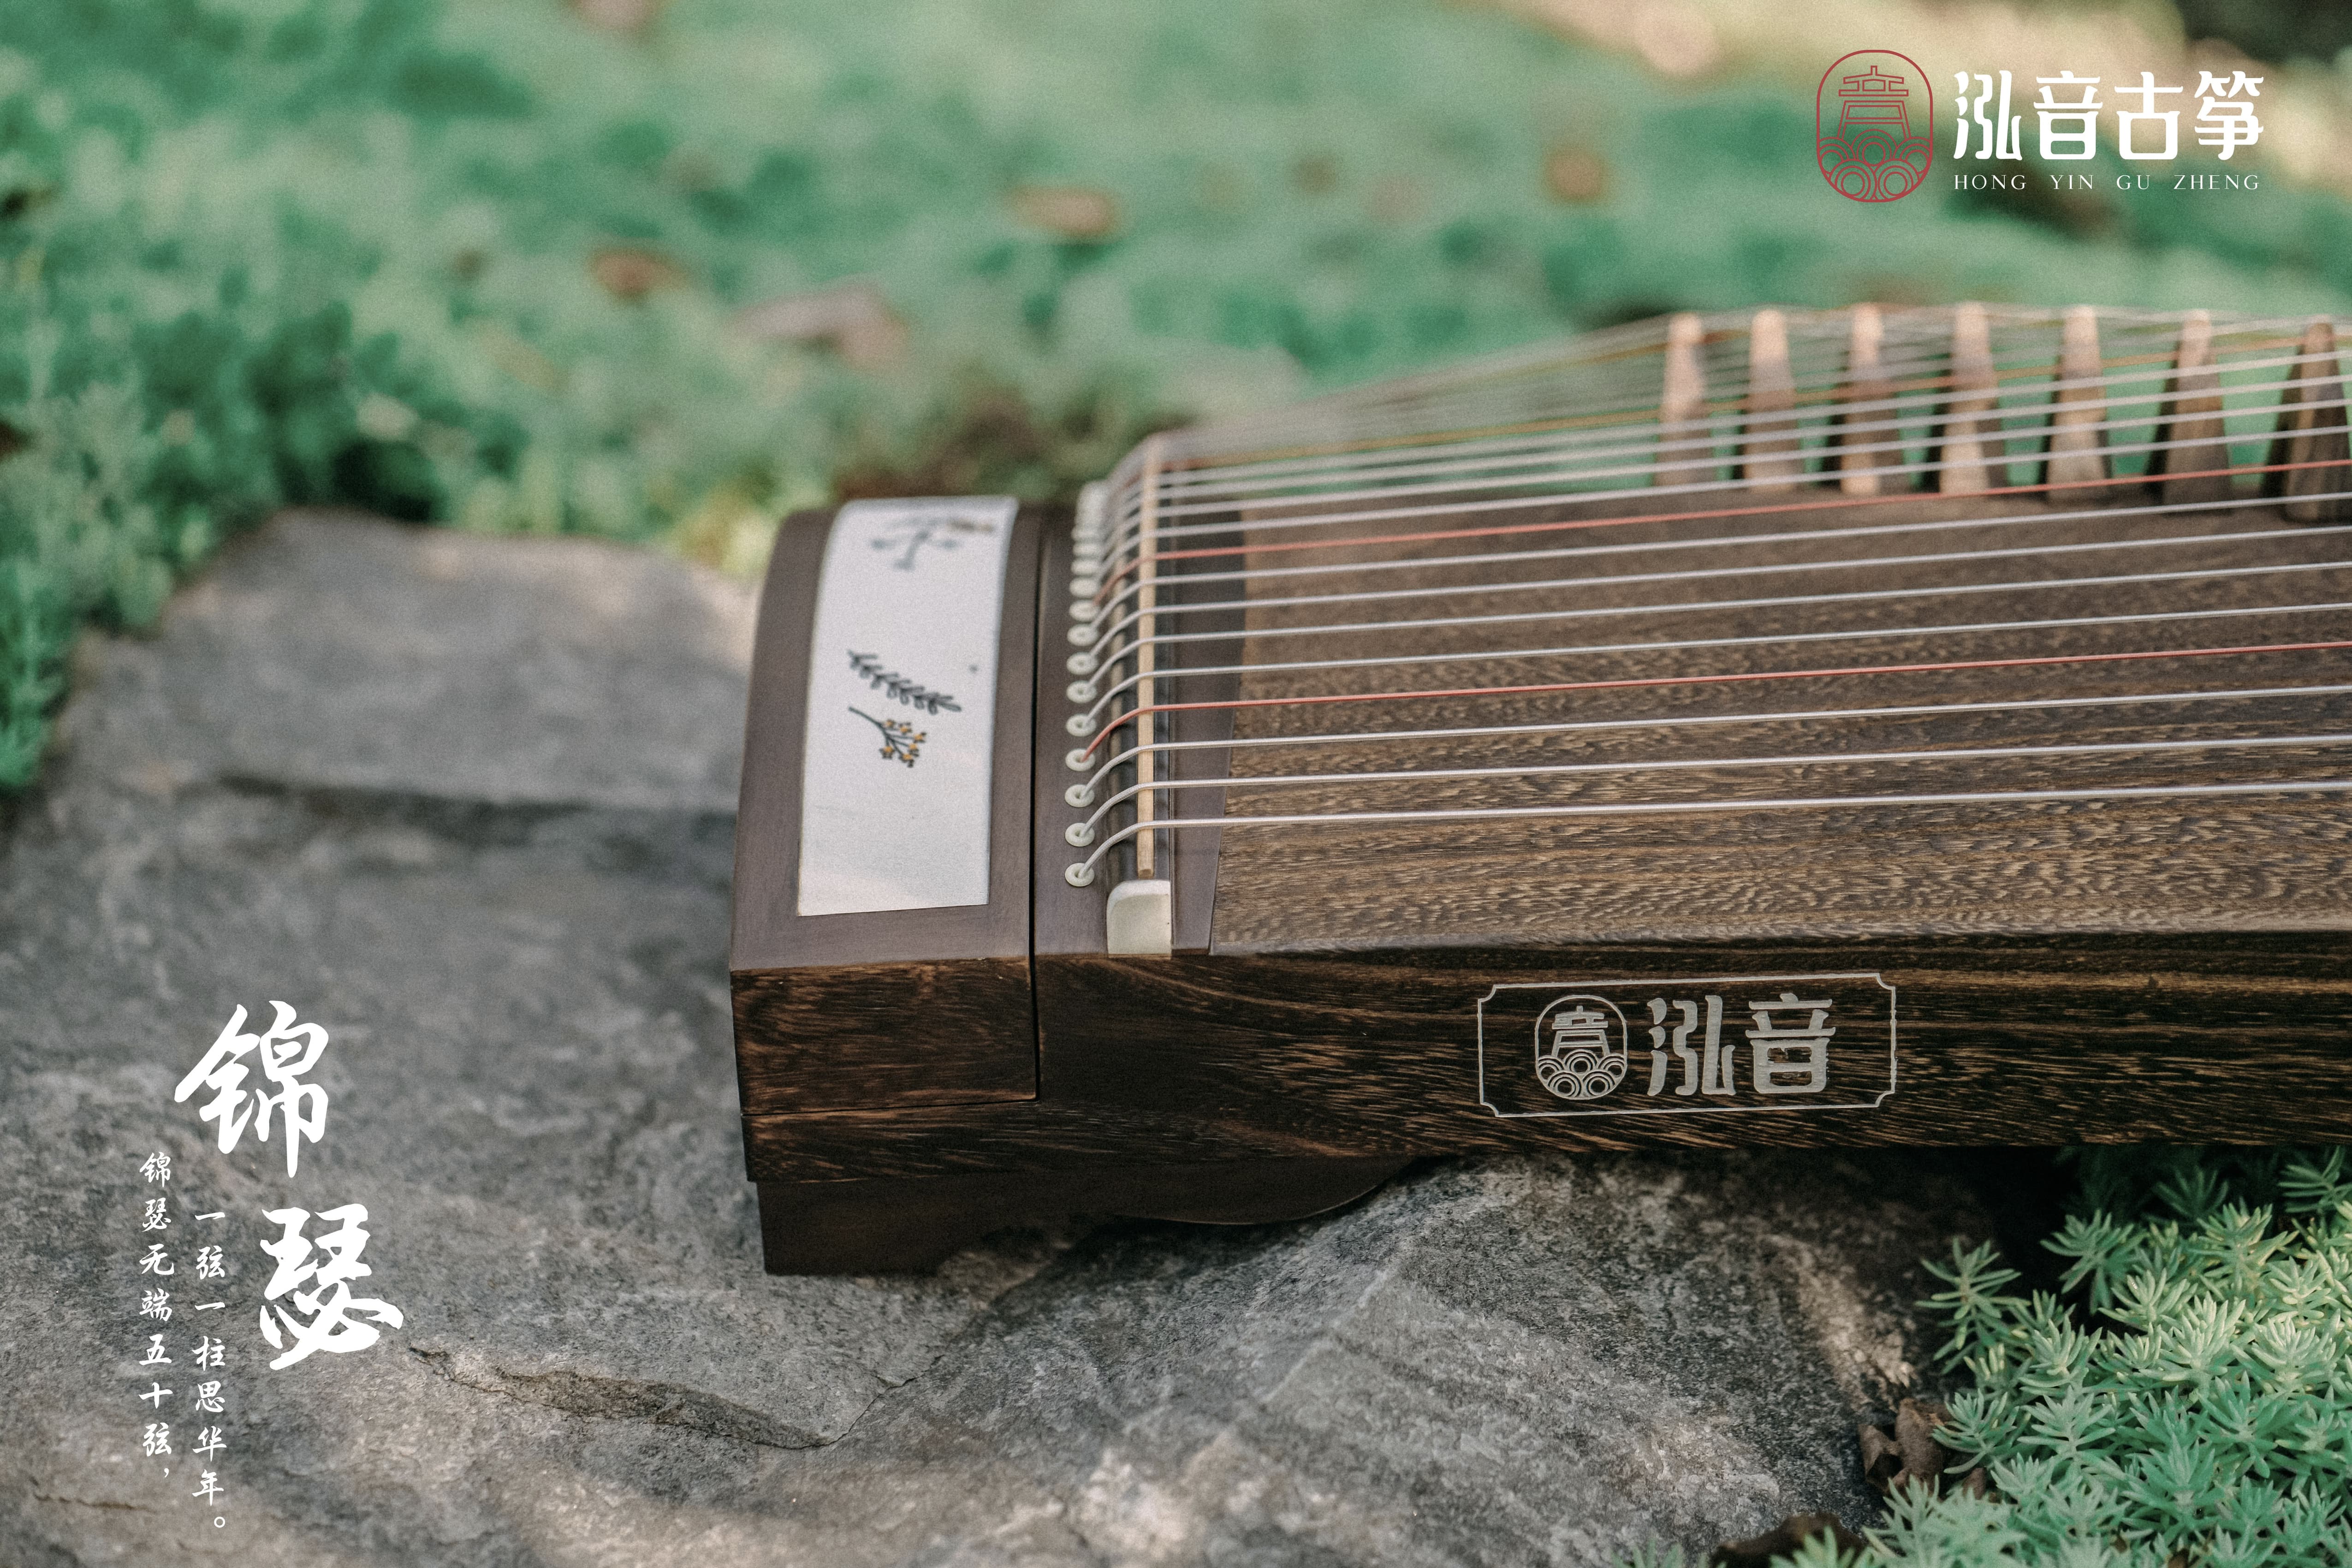 Hongyin 51in Paulownia Carved Guzheng “Jin Se” at Guzheng World  古筝世界｜泓音130cm手工刺绣桐木小挖筝“锦瑟”